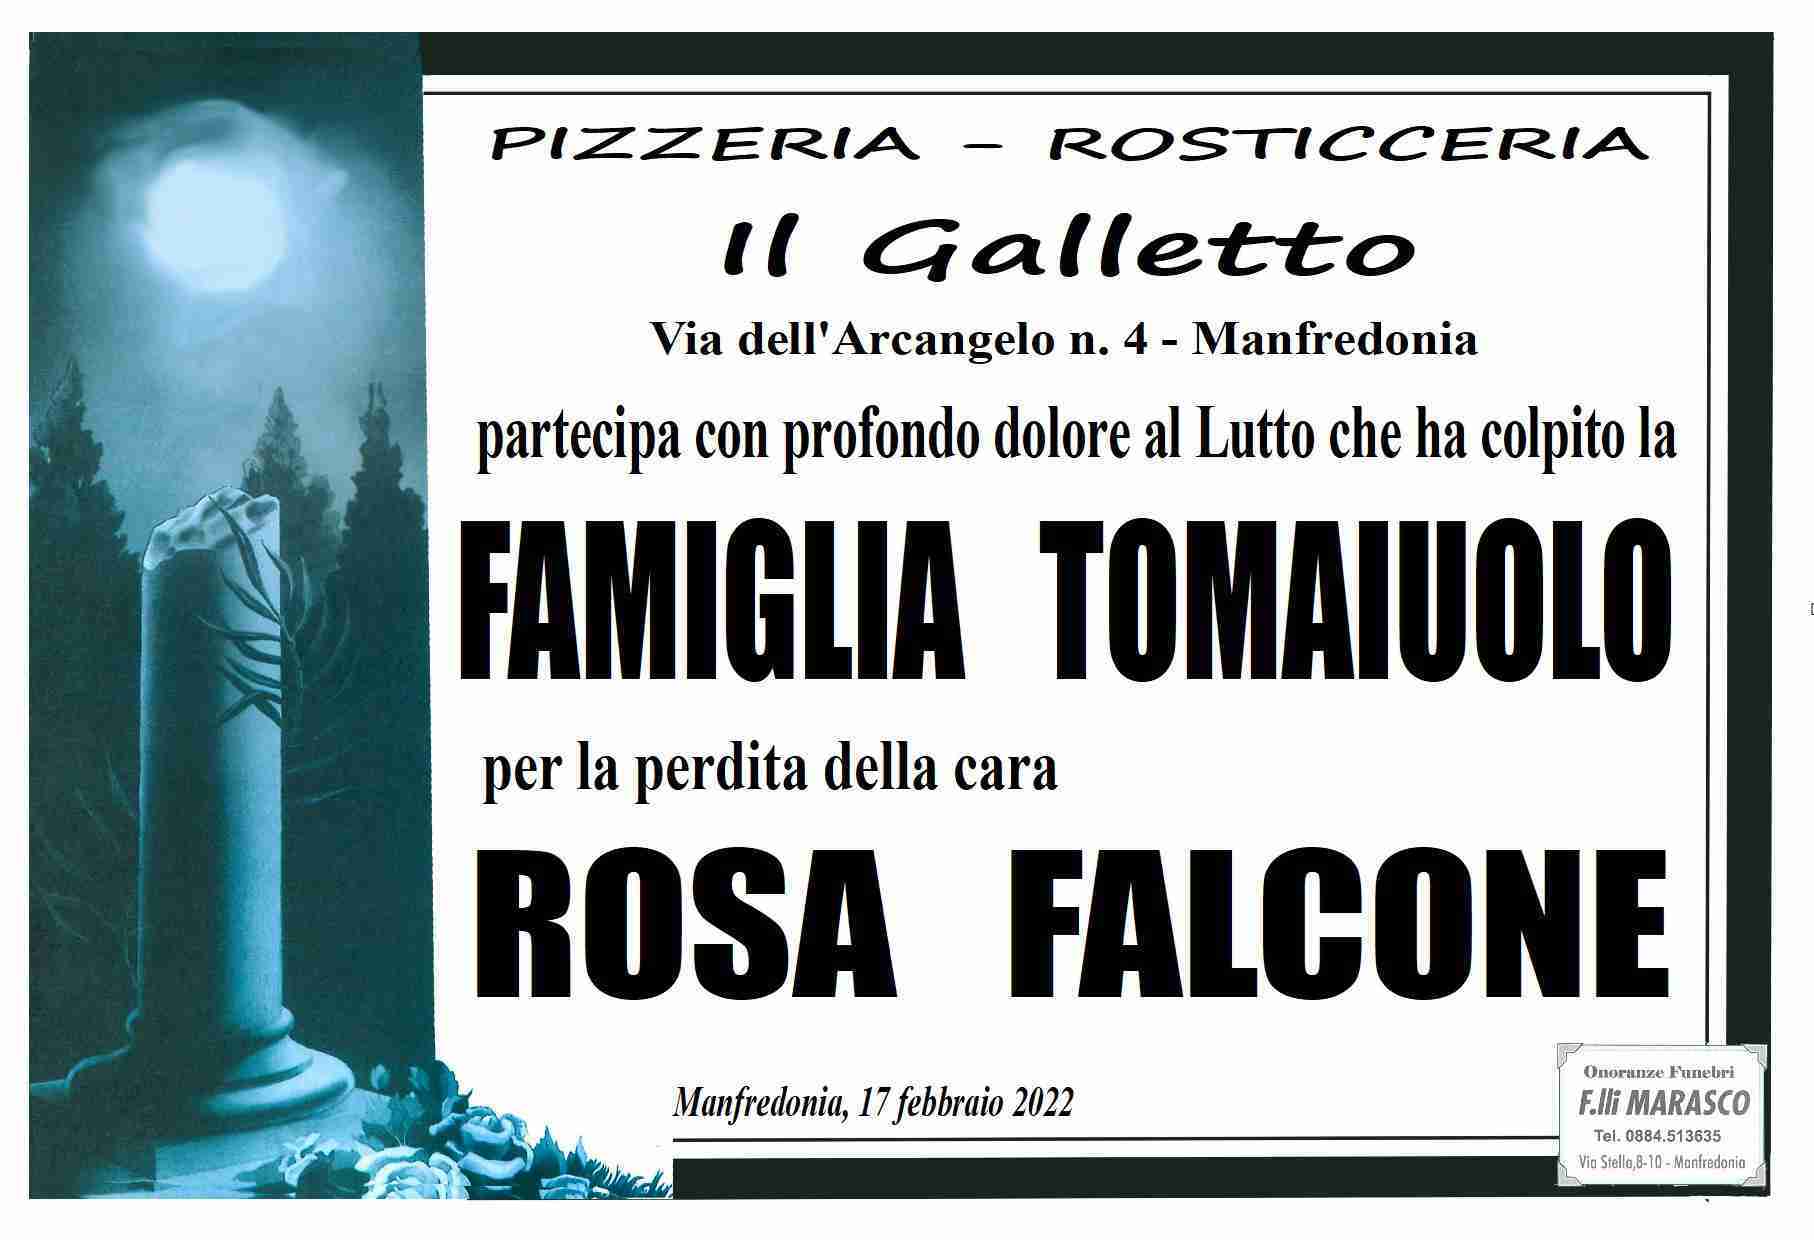 Rosa Falcone